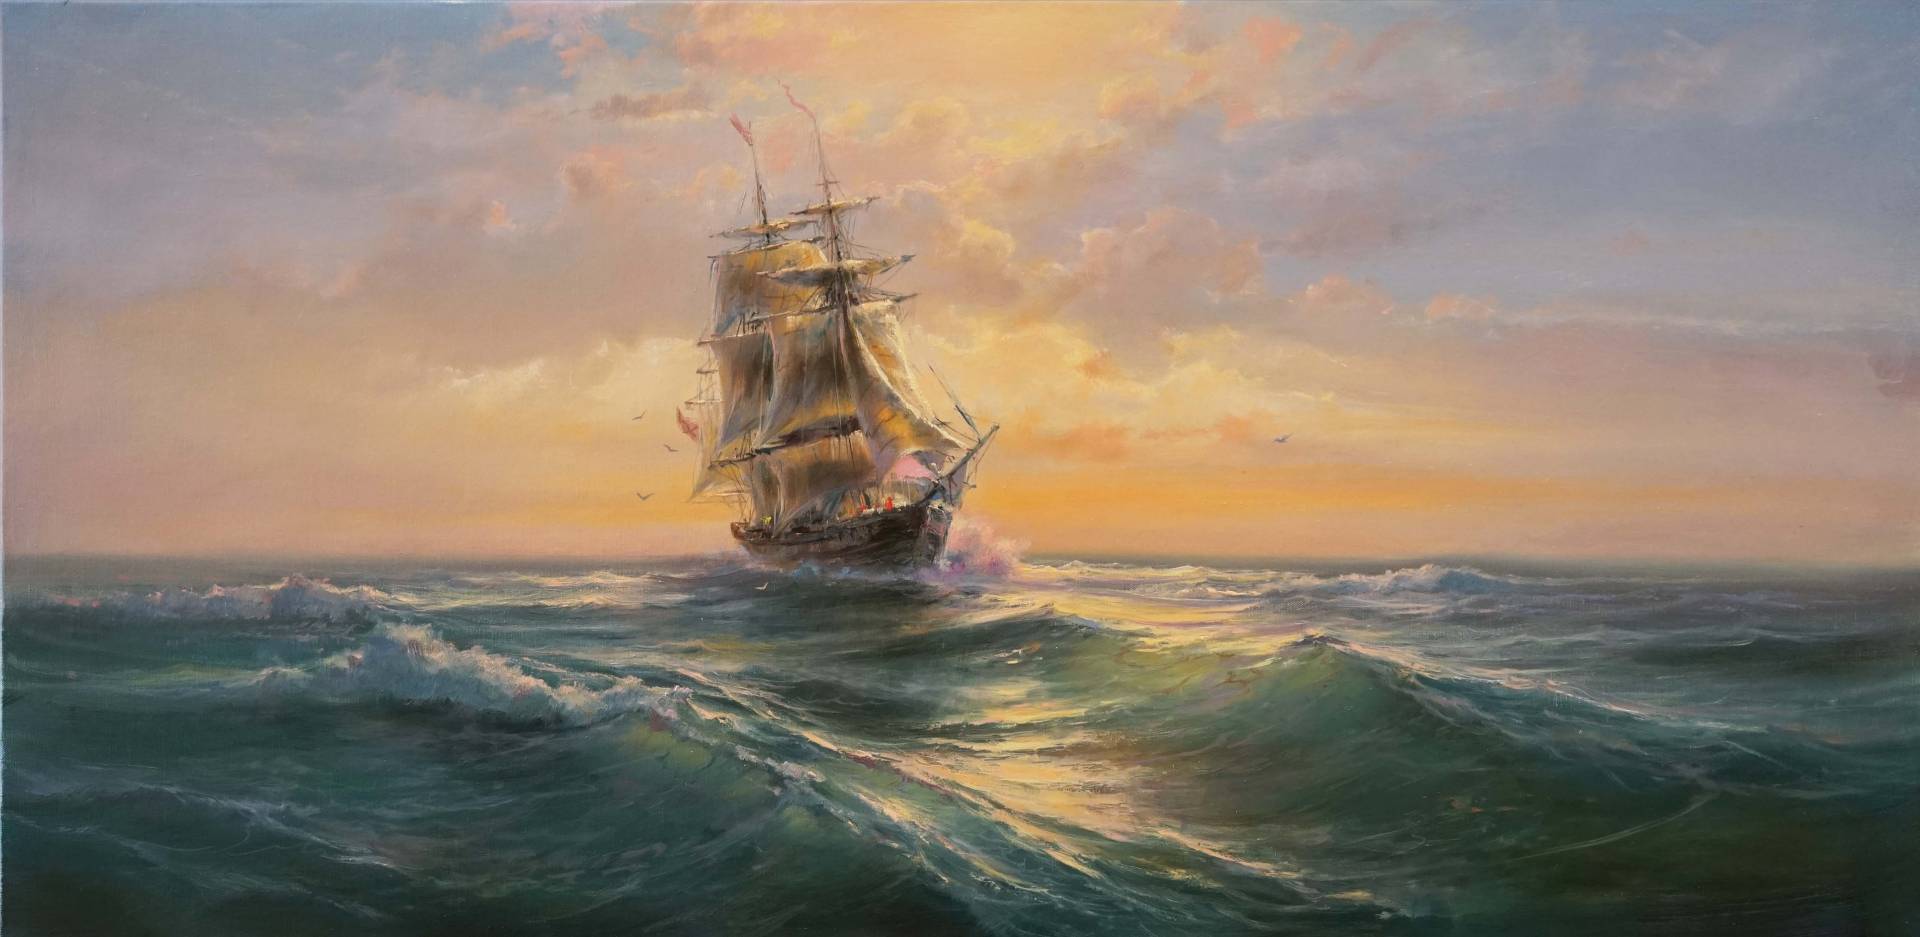 On the Waves - 1, Dmitry Balakhonov, Buy the painting Oil